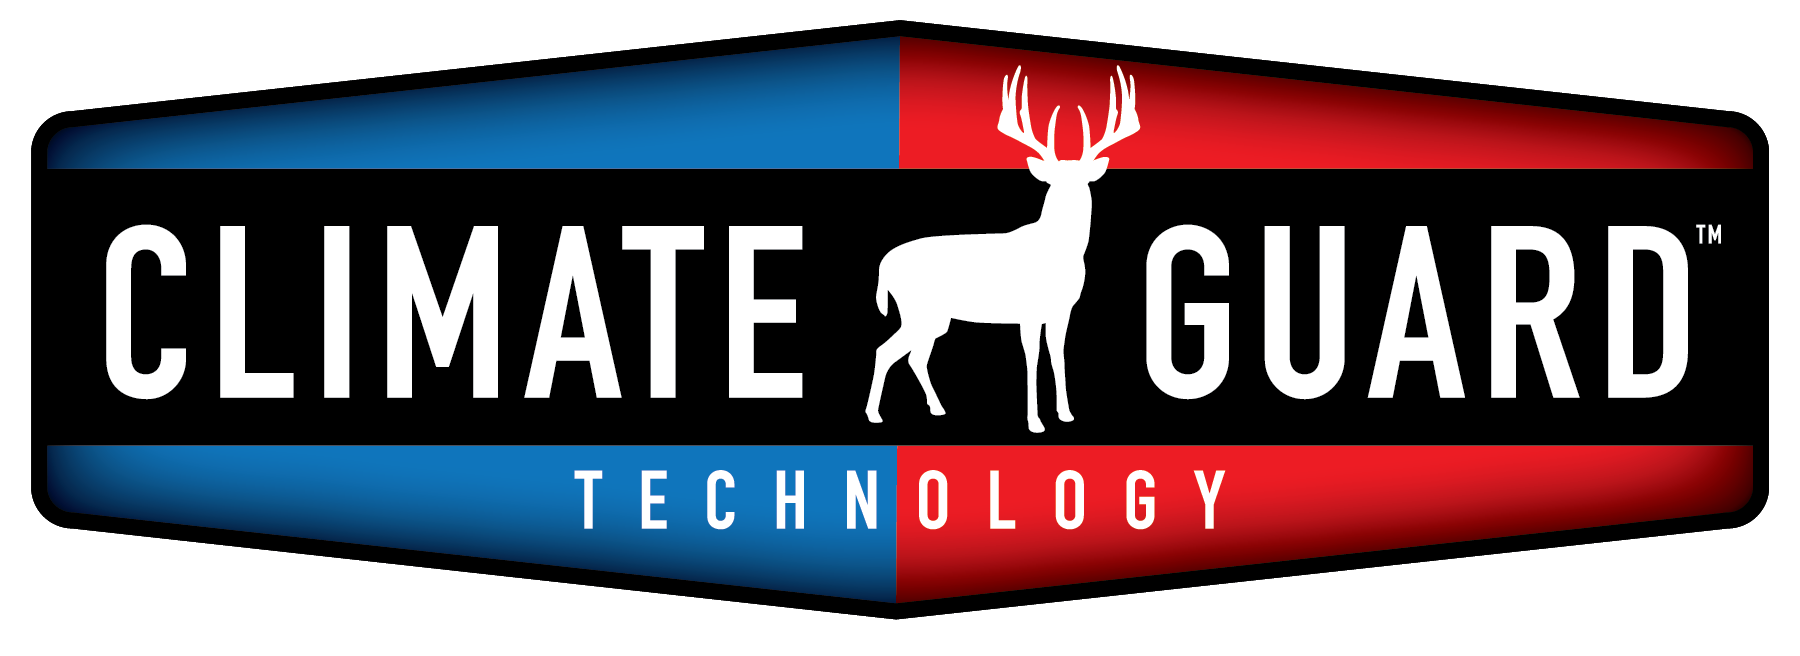 Climate Guard Technology Logo